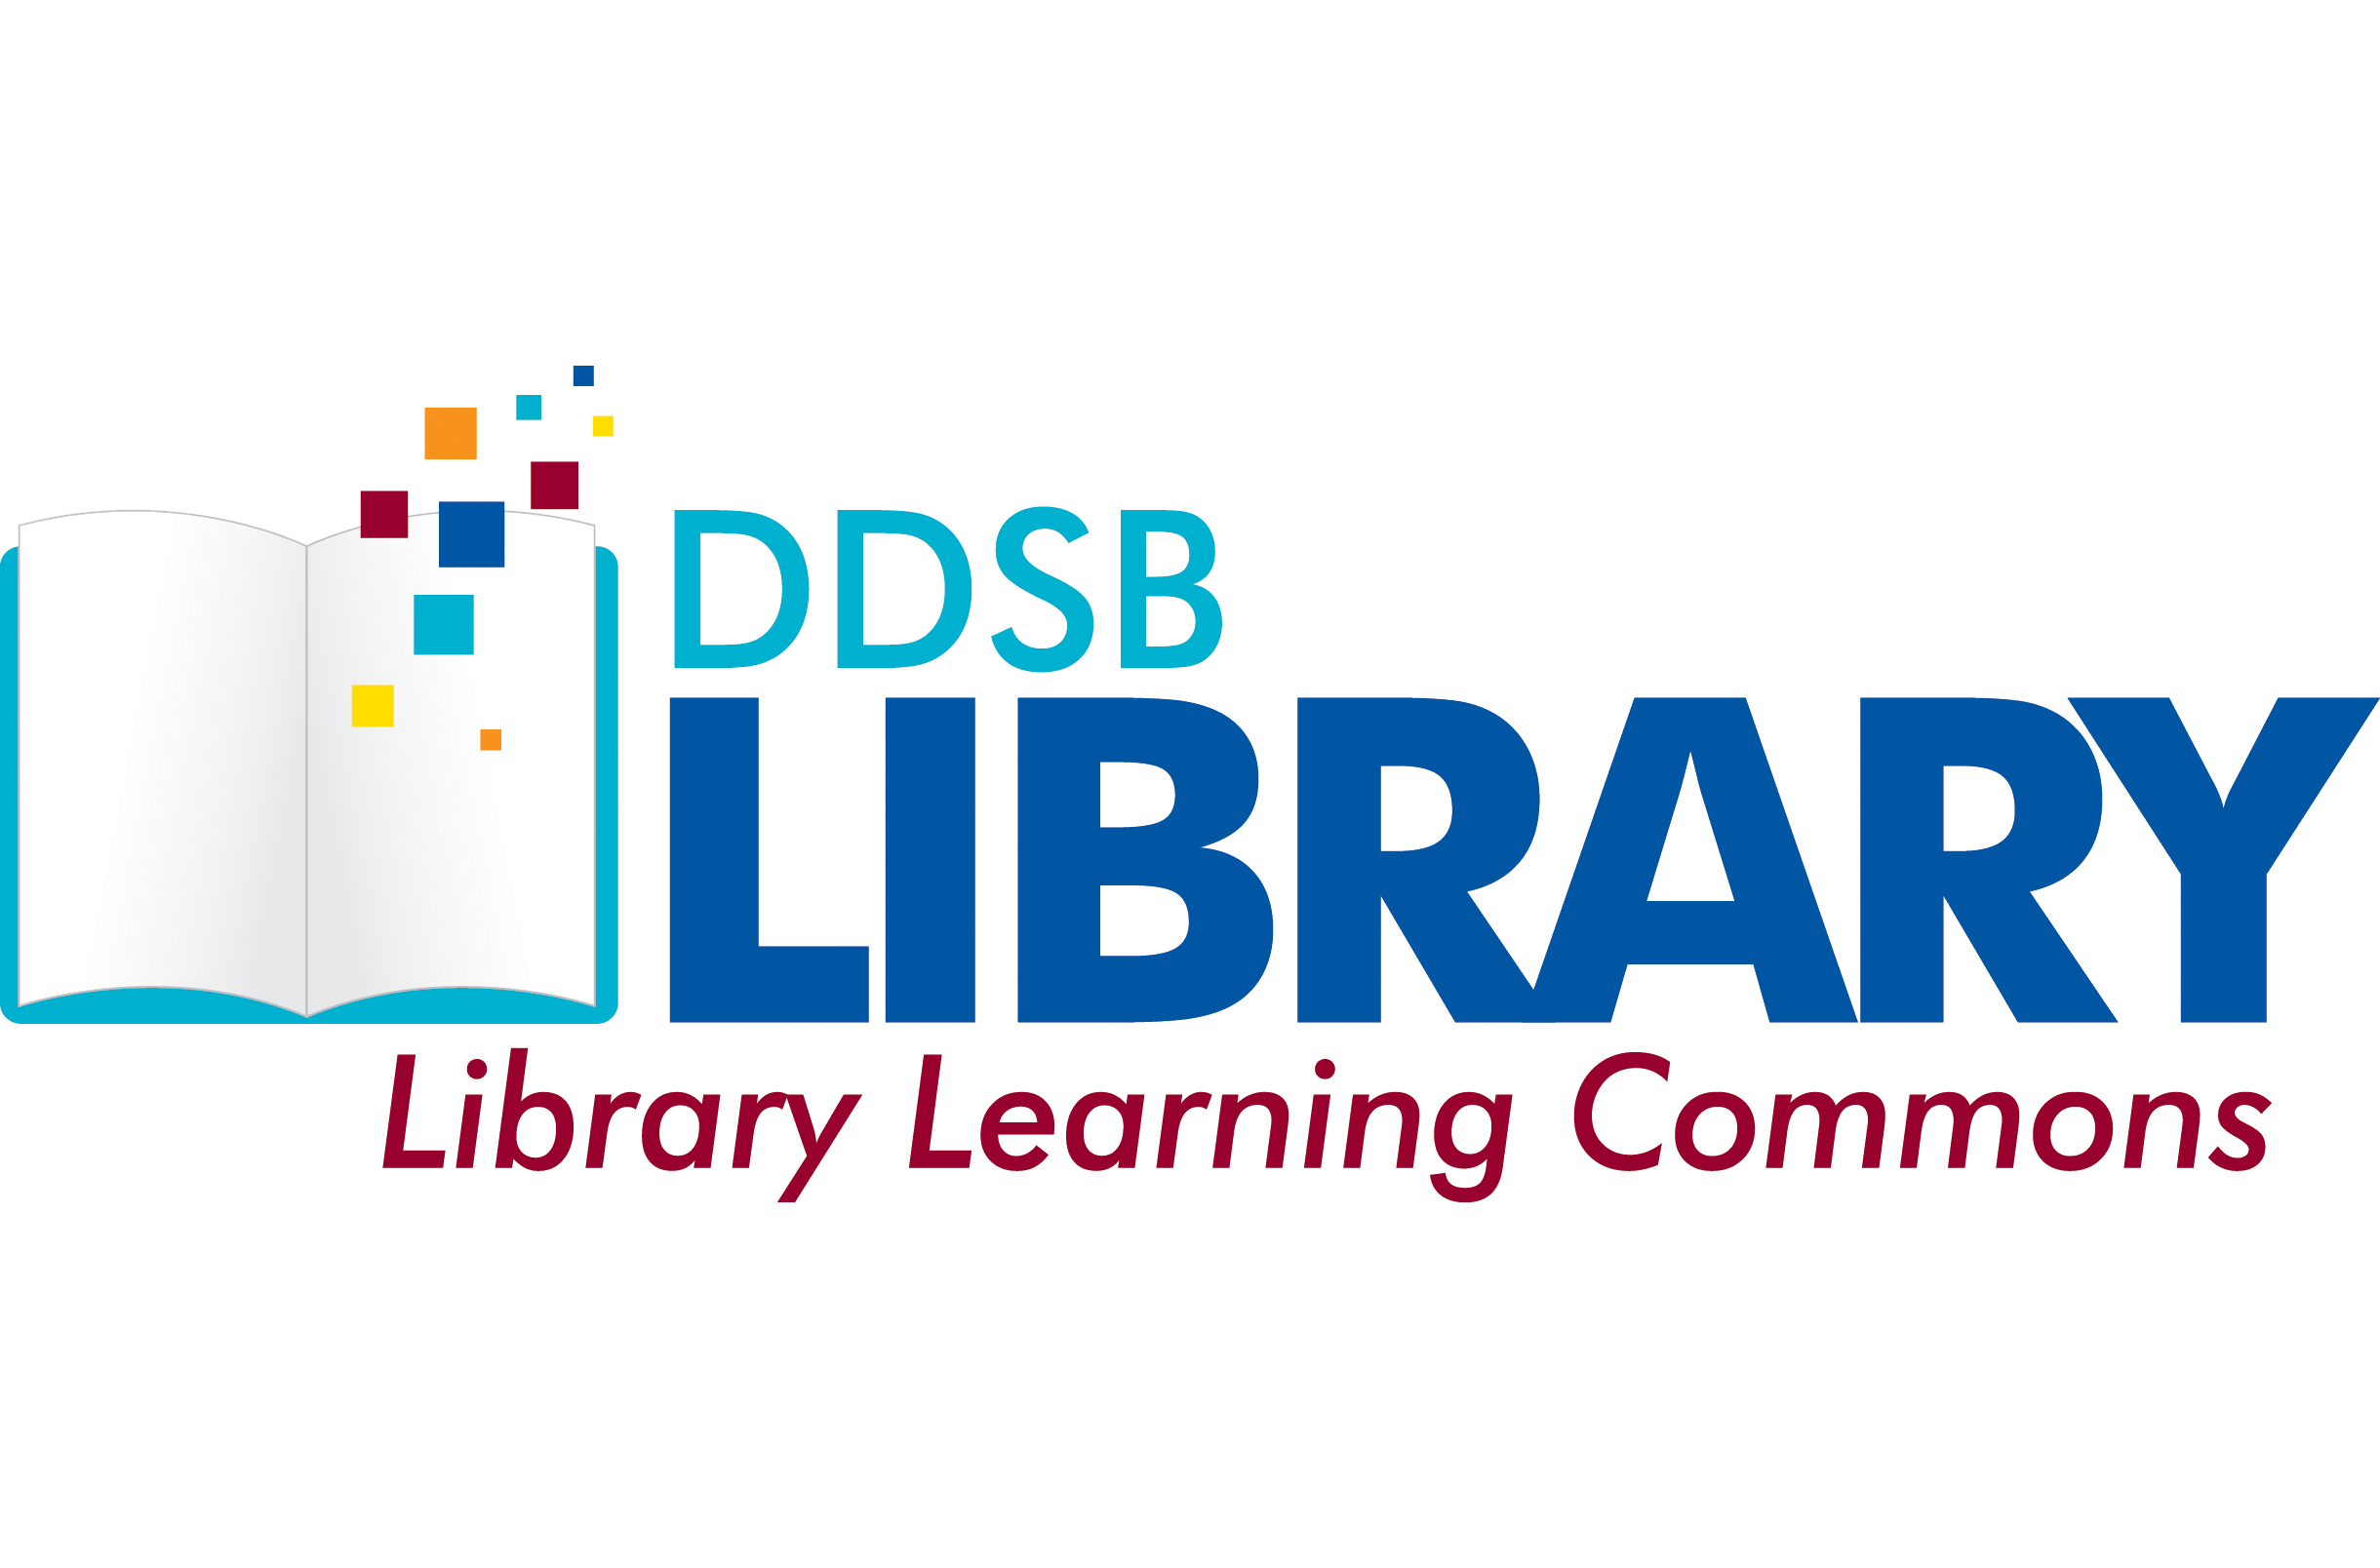 DDSB Library Learning Commons logo